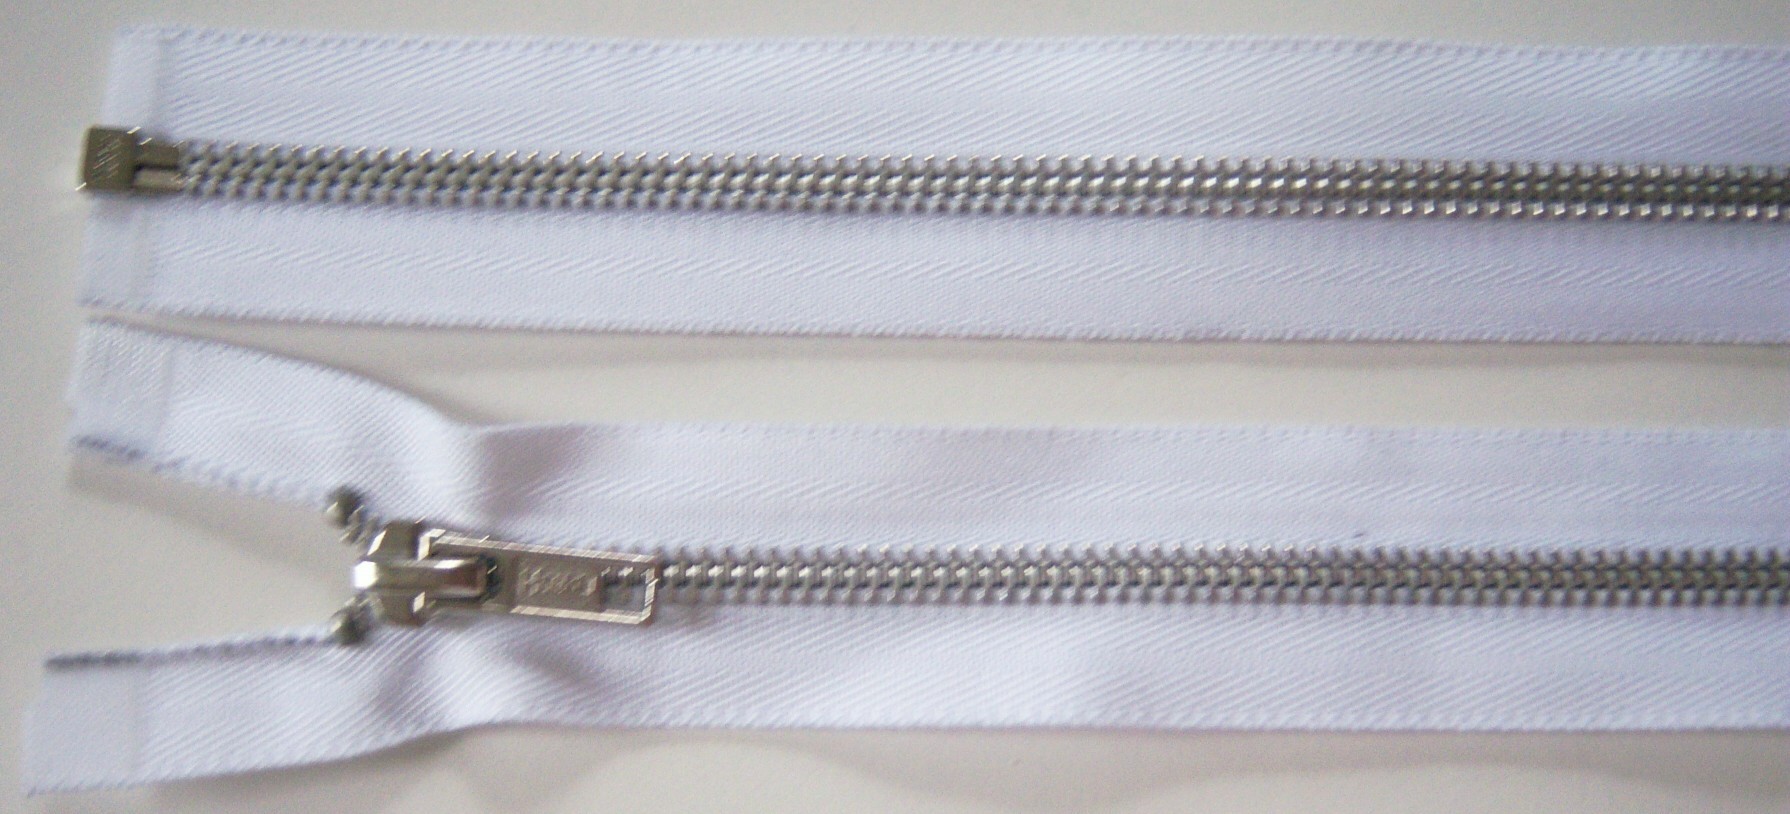 White Ideal 22 1/2" Metal Separating Zipper